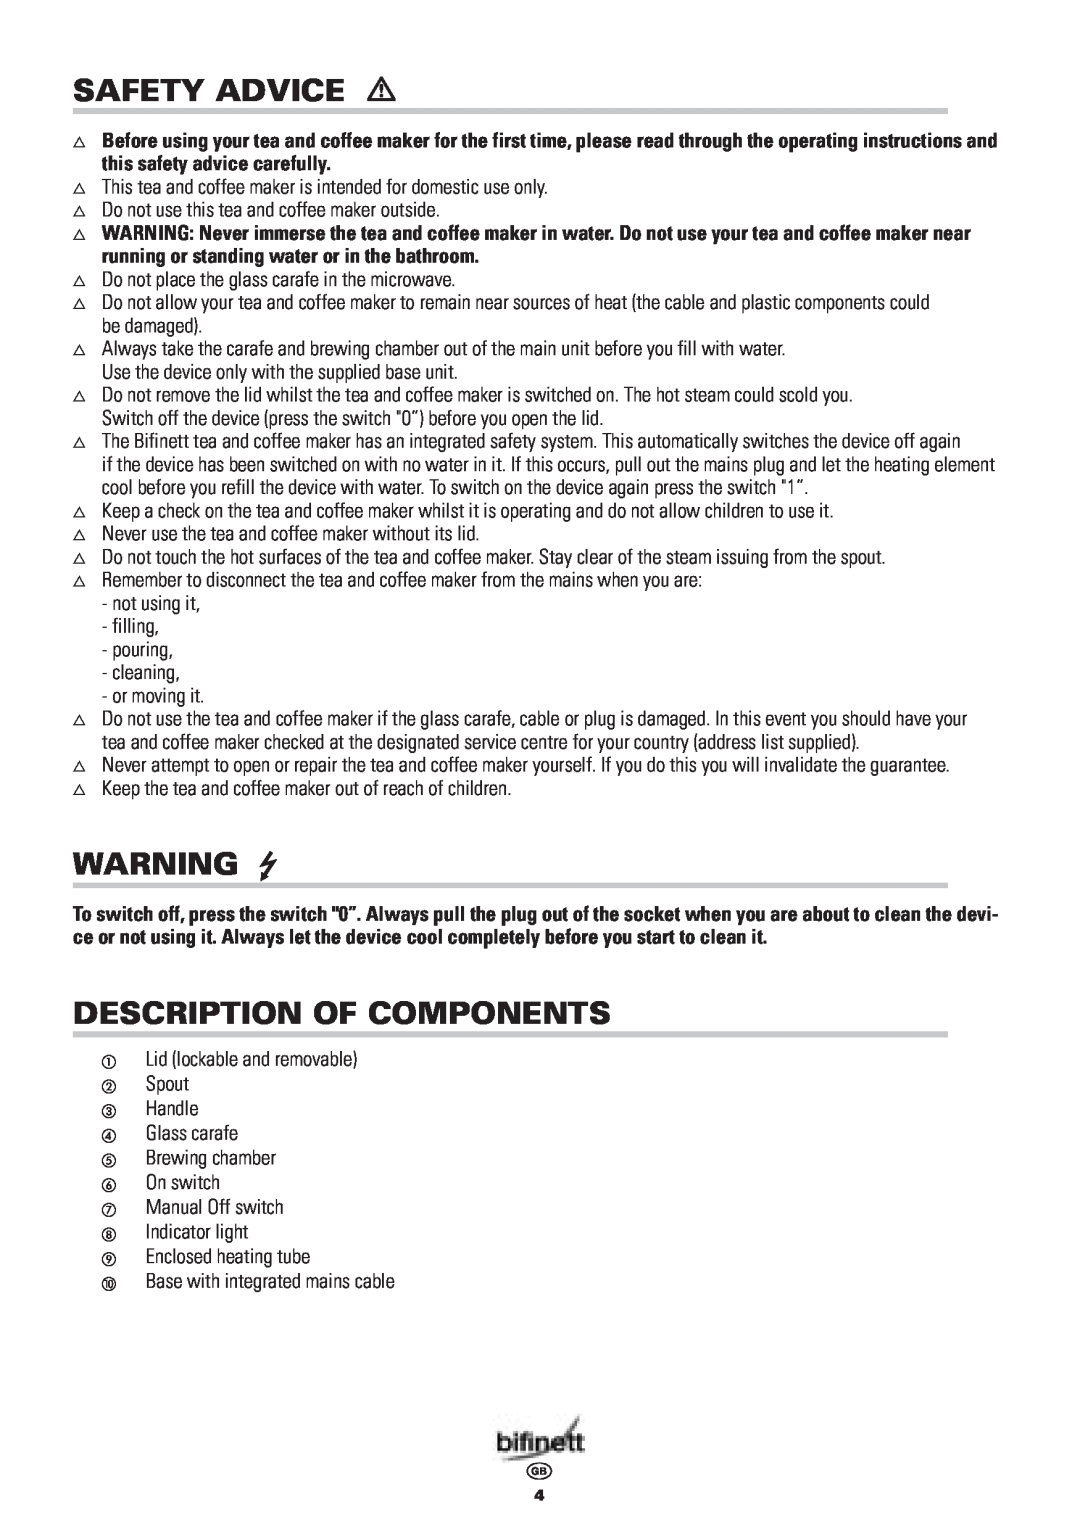 Bifinett KH 600 manual Safety Advice, Description Of Components 